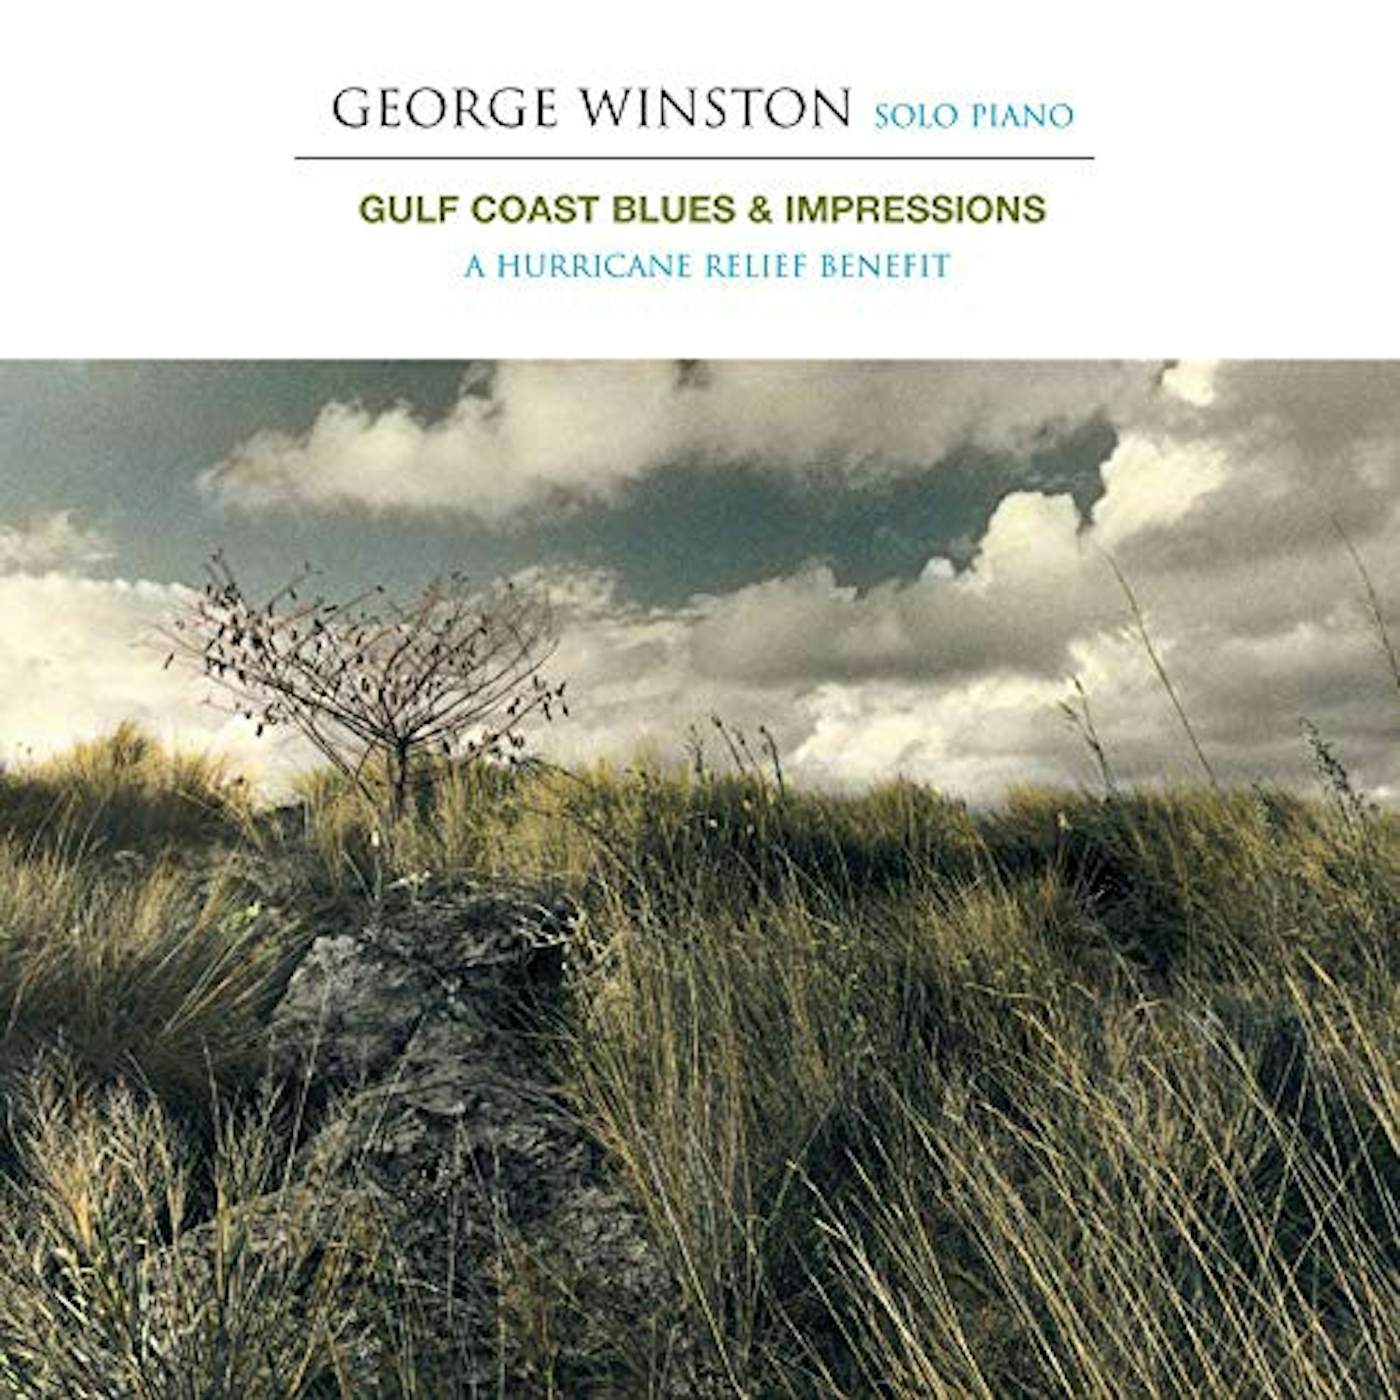 George Winston GULF COAST BLUES & IMPRESSIONS: A HURRICANE RELIEF CD